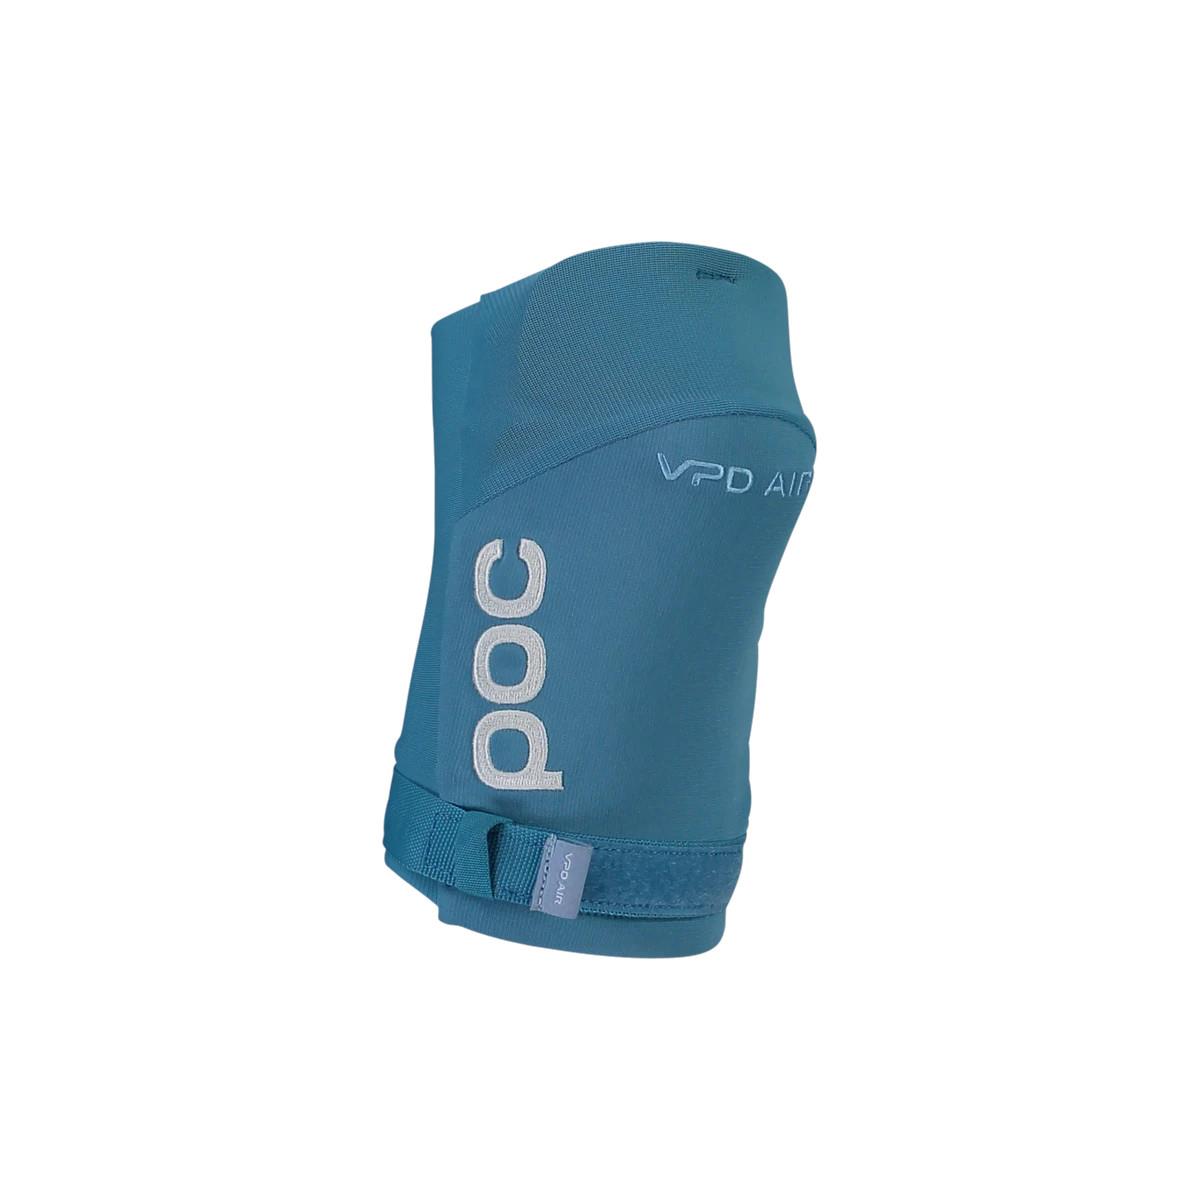 Joint VPD Air Elbow Protectors Basalt Blue Size XL